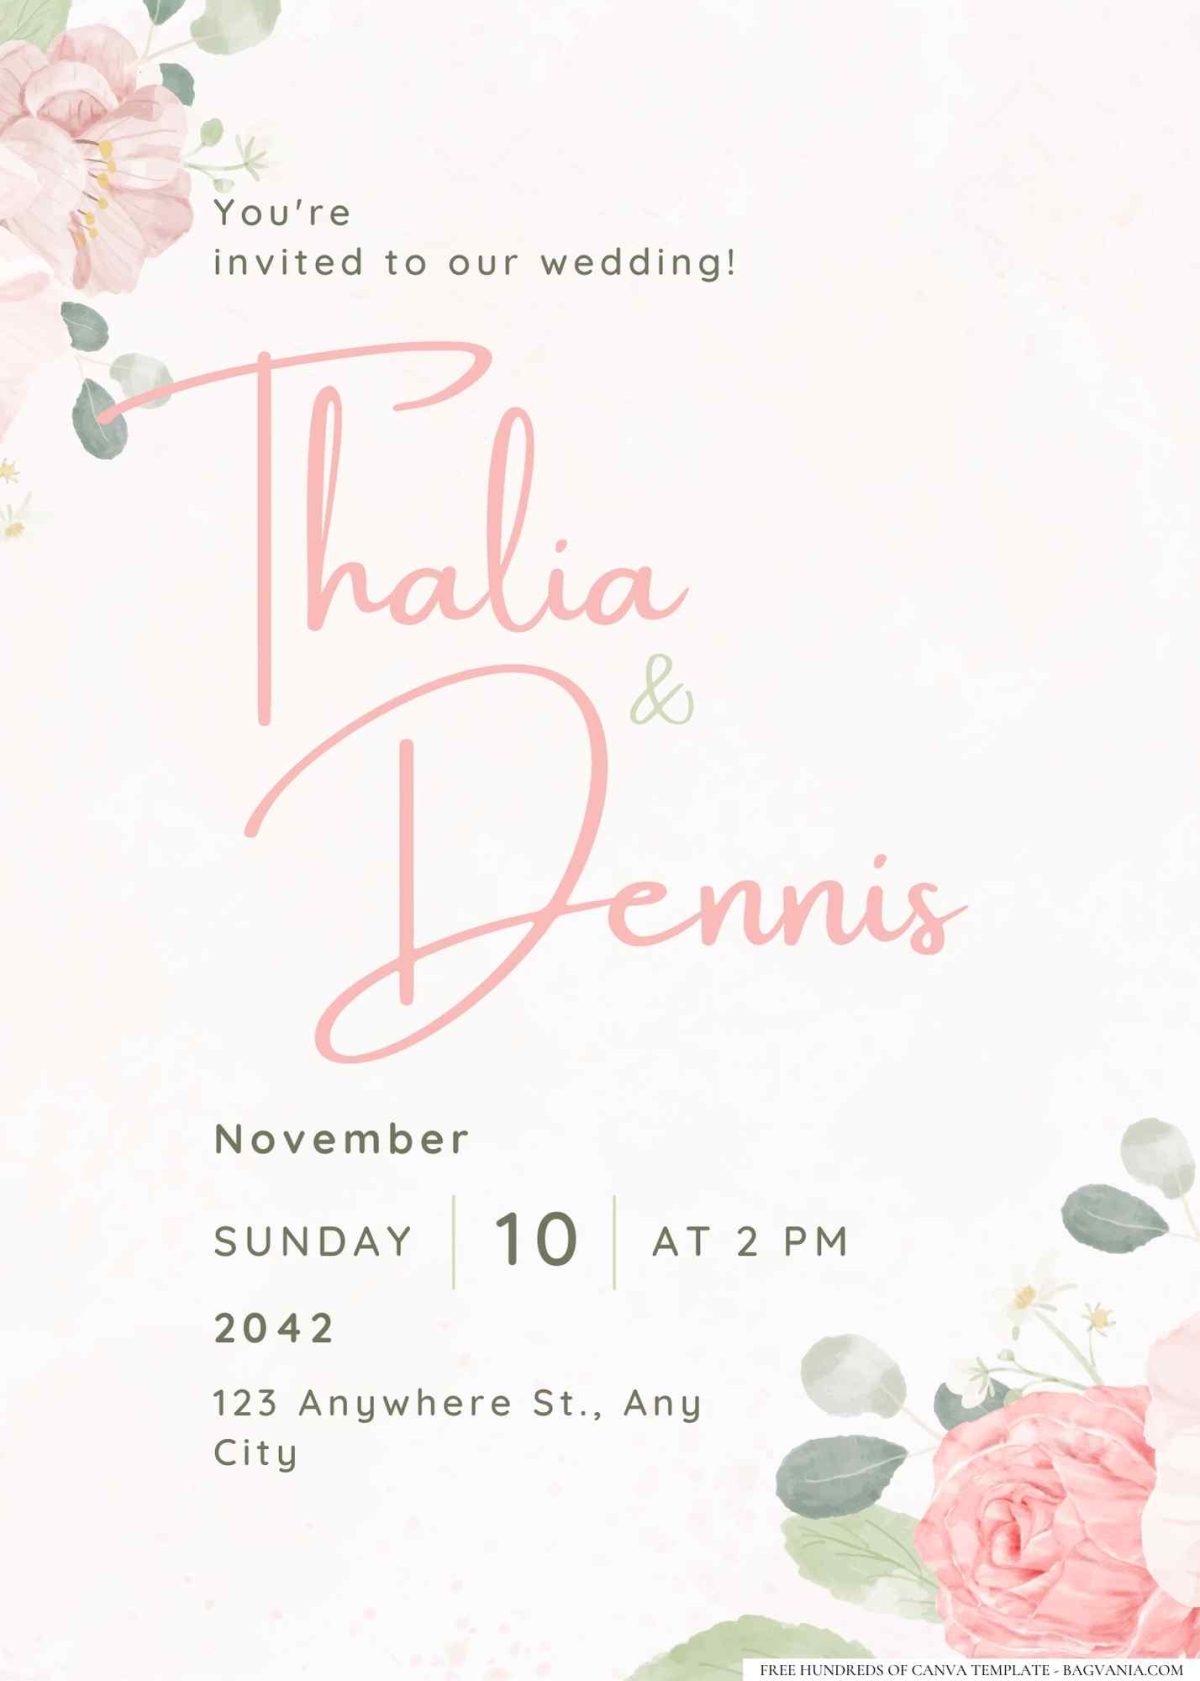 FREE Editable Delicate Rose and Peony Illustrations Wedding Invitation